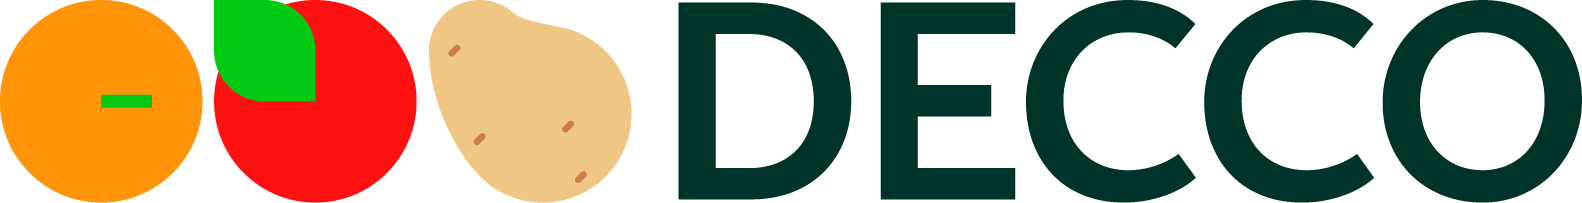 DECCO US Logo